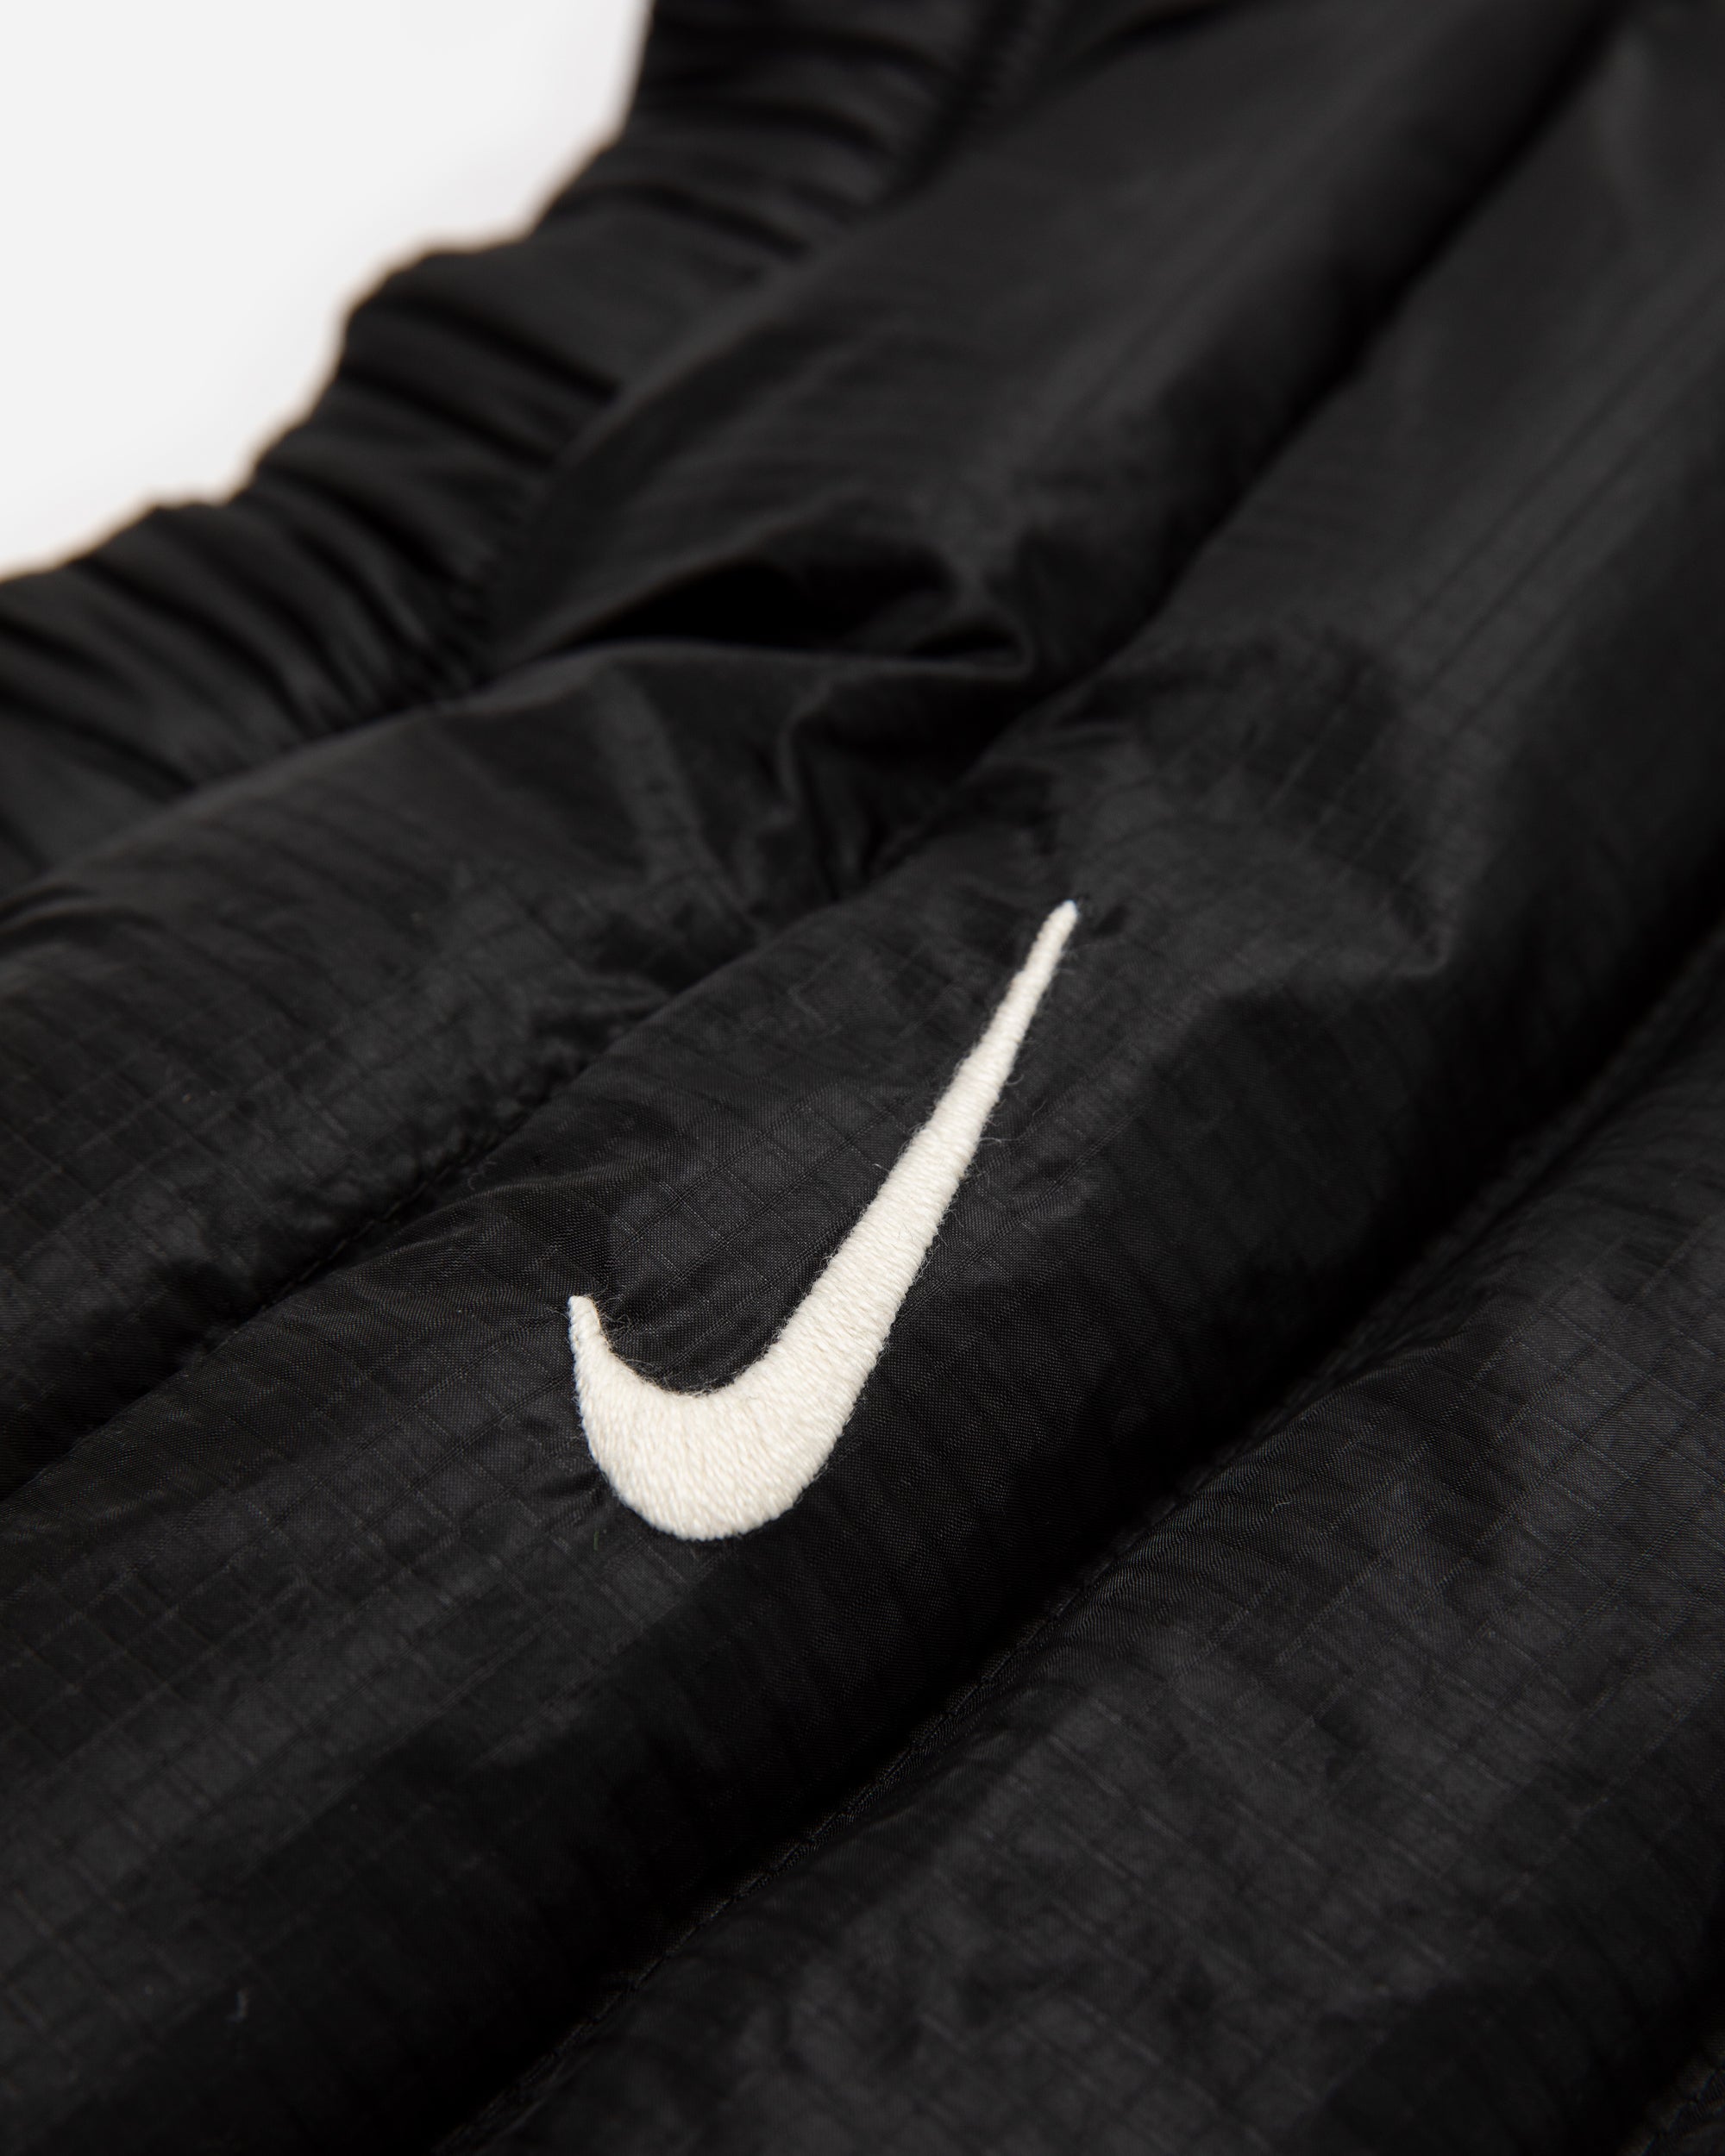 NIKE QS/TZ Nike x Stussy NRG Insulated Skirt Black DC1088-010